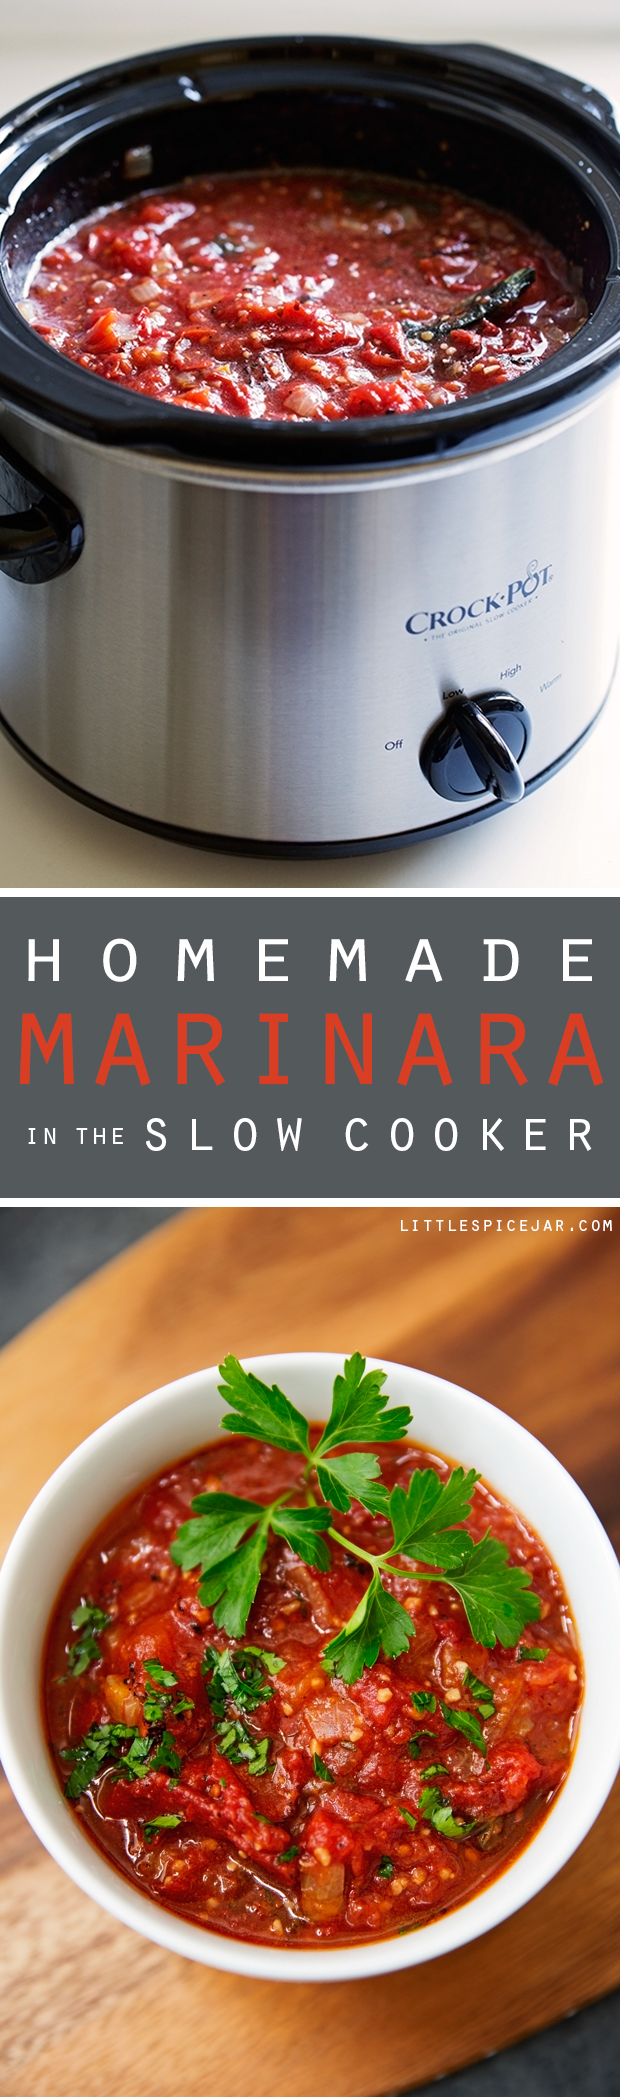 Homemade Marinara Sauce (Slow Cooker) - easy marinara sauce made in the slow cooker and it tastes 1000% better than the store bought stuff! #marinarasauce #slowcookermarinarasauce #crockpotmarinarasauce | Littlespicejar.com